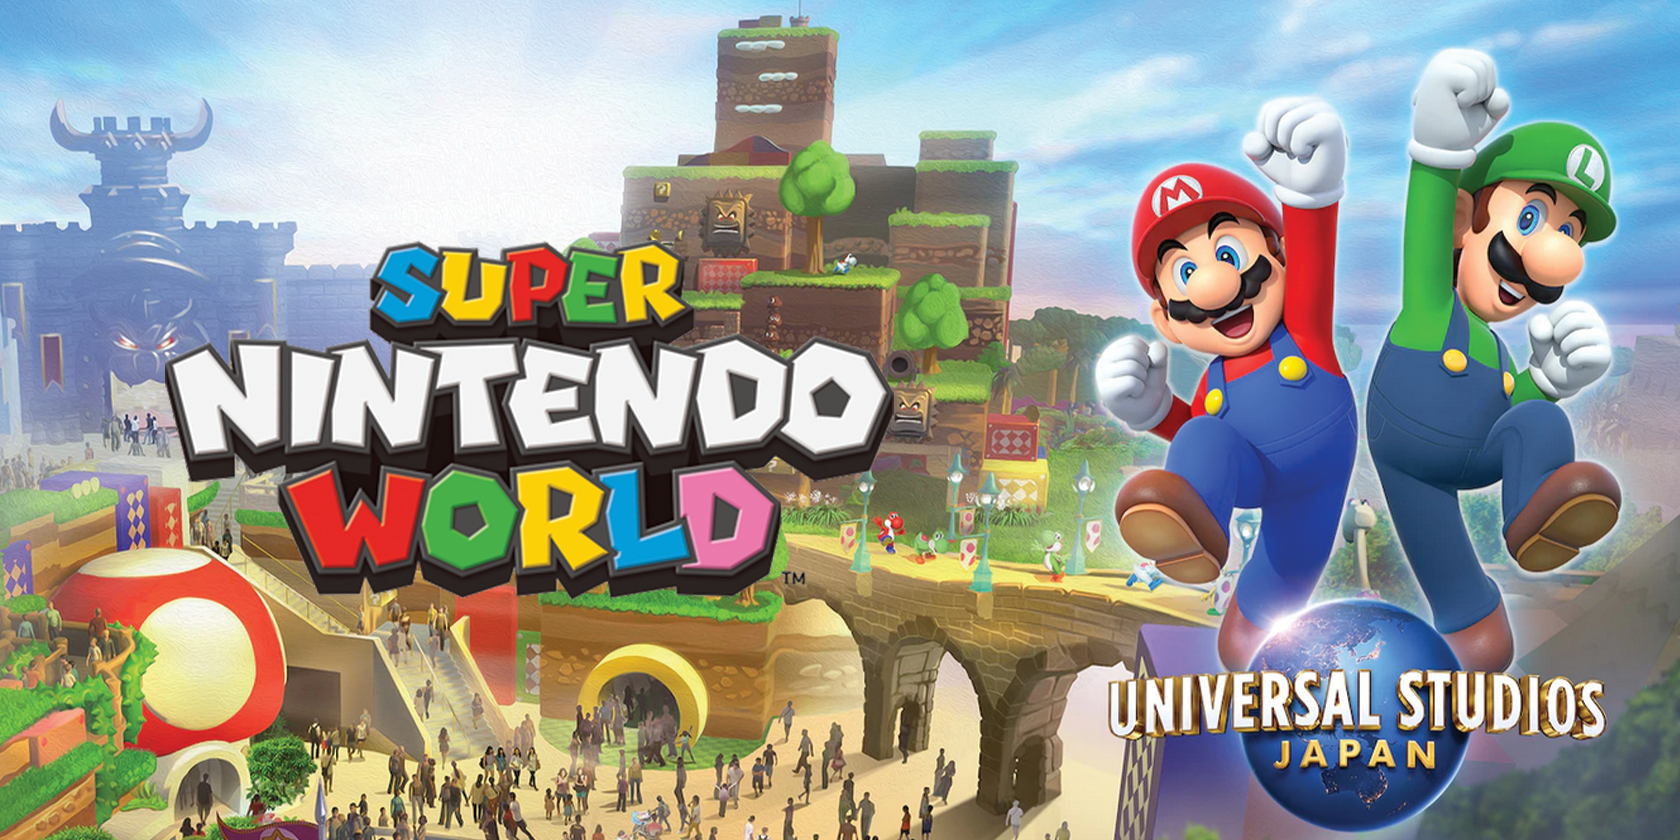 Nintendo Offers a First Look at Super Nintendo World